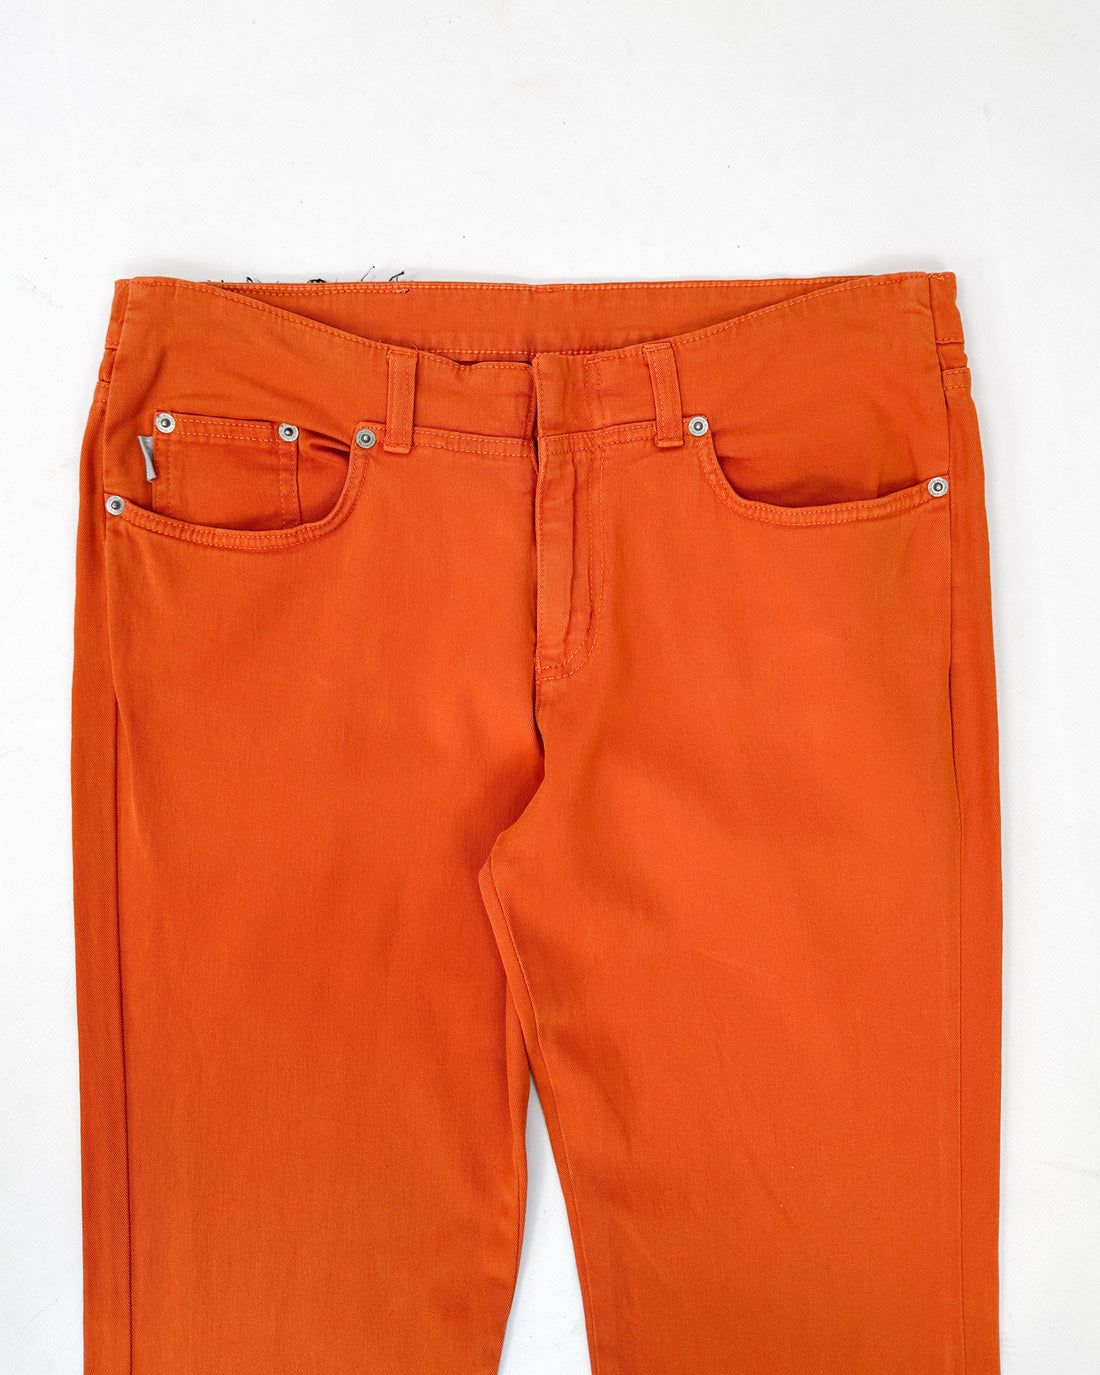 Iceberg Orange Utility Zip Pants 2000's